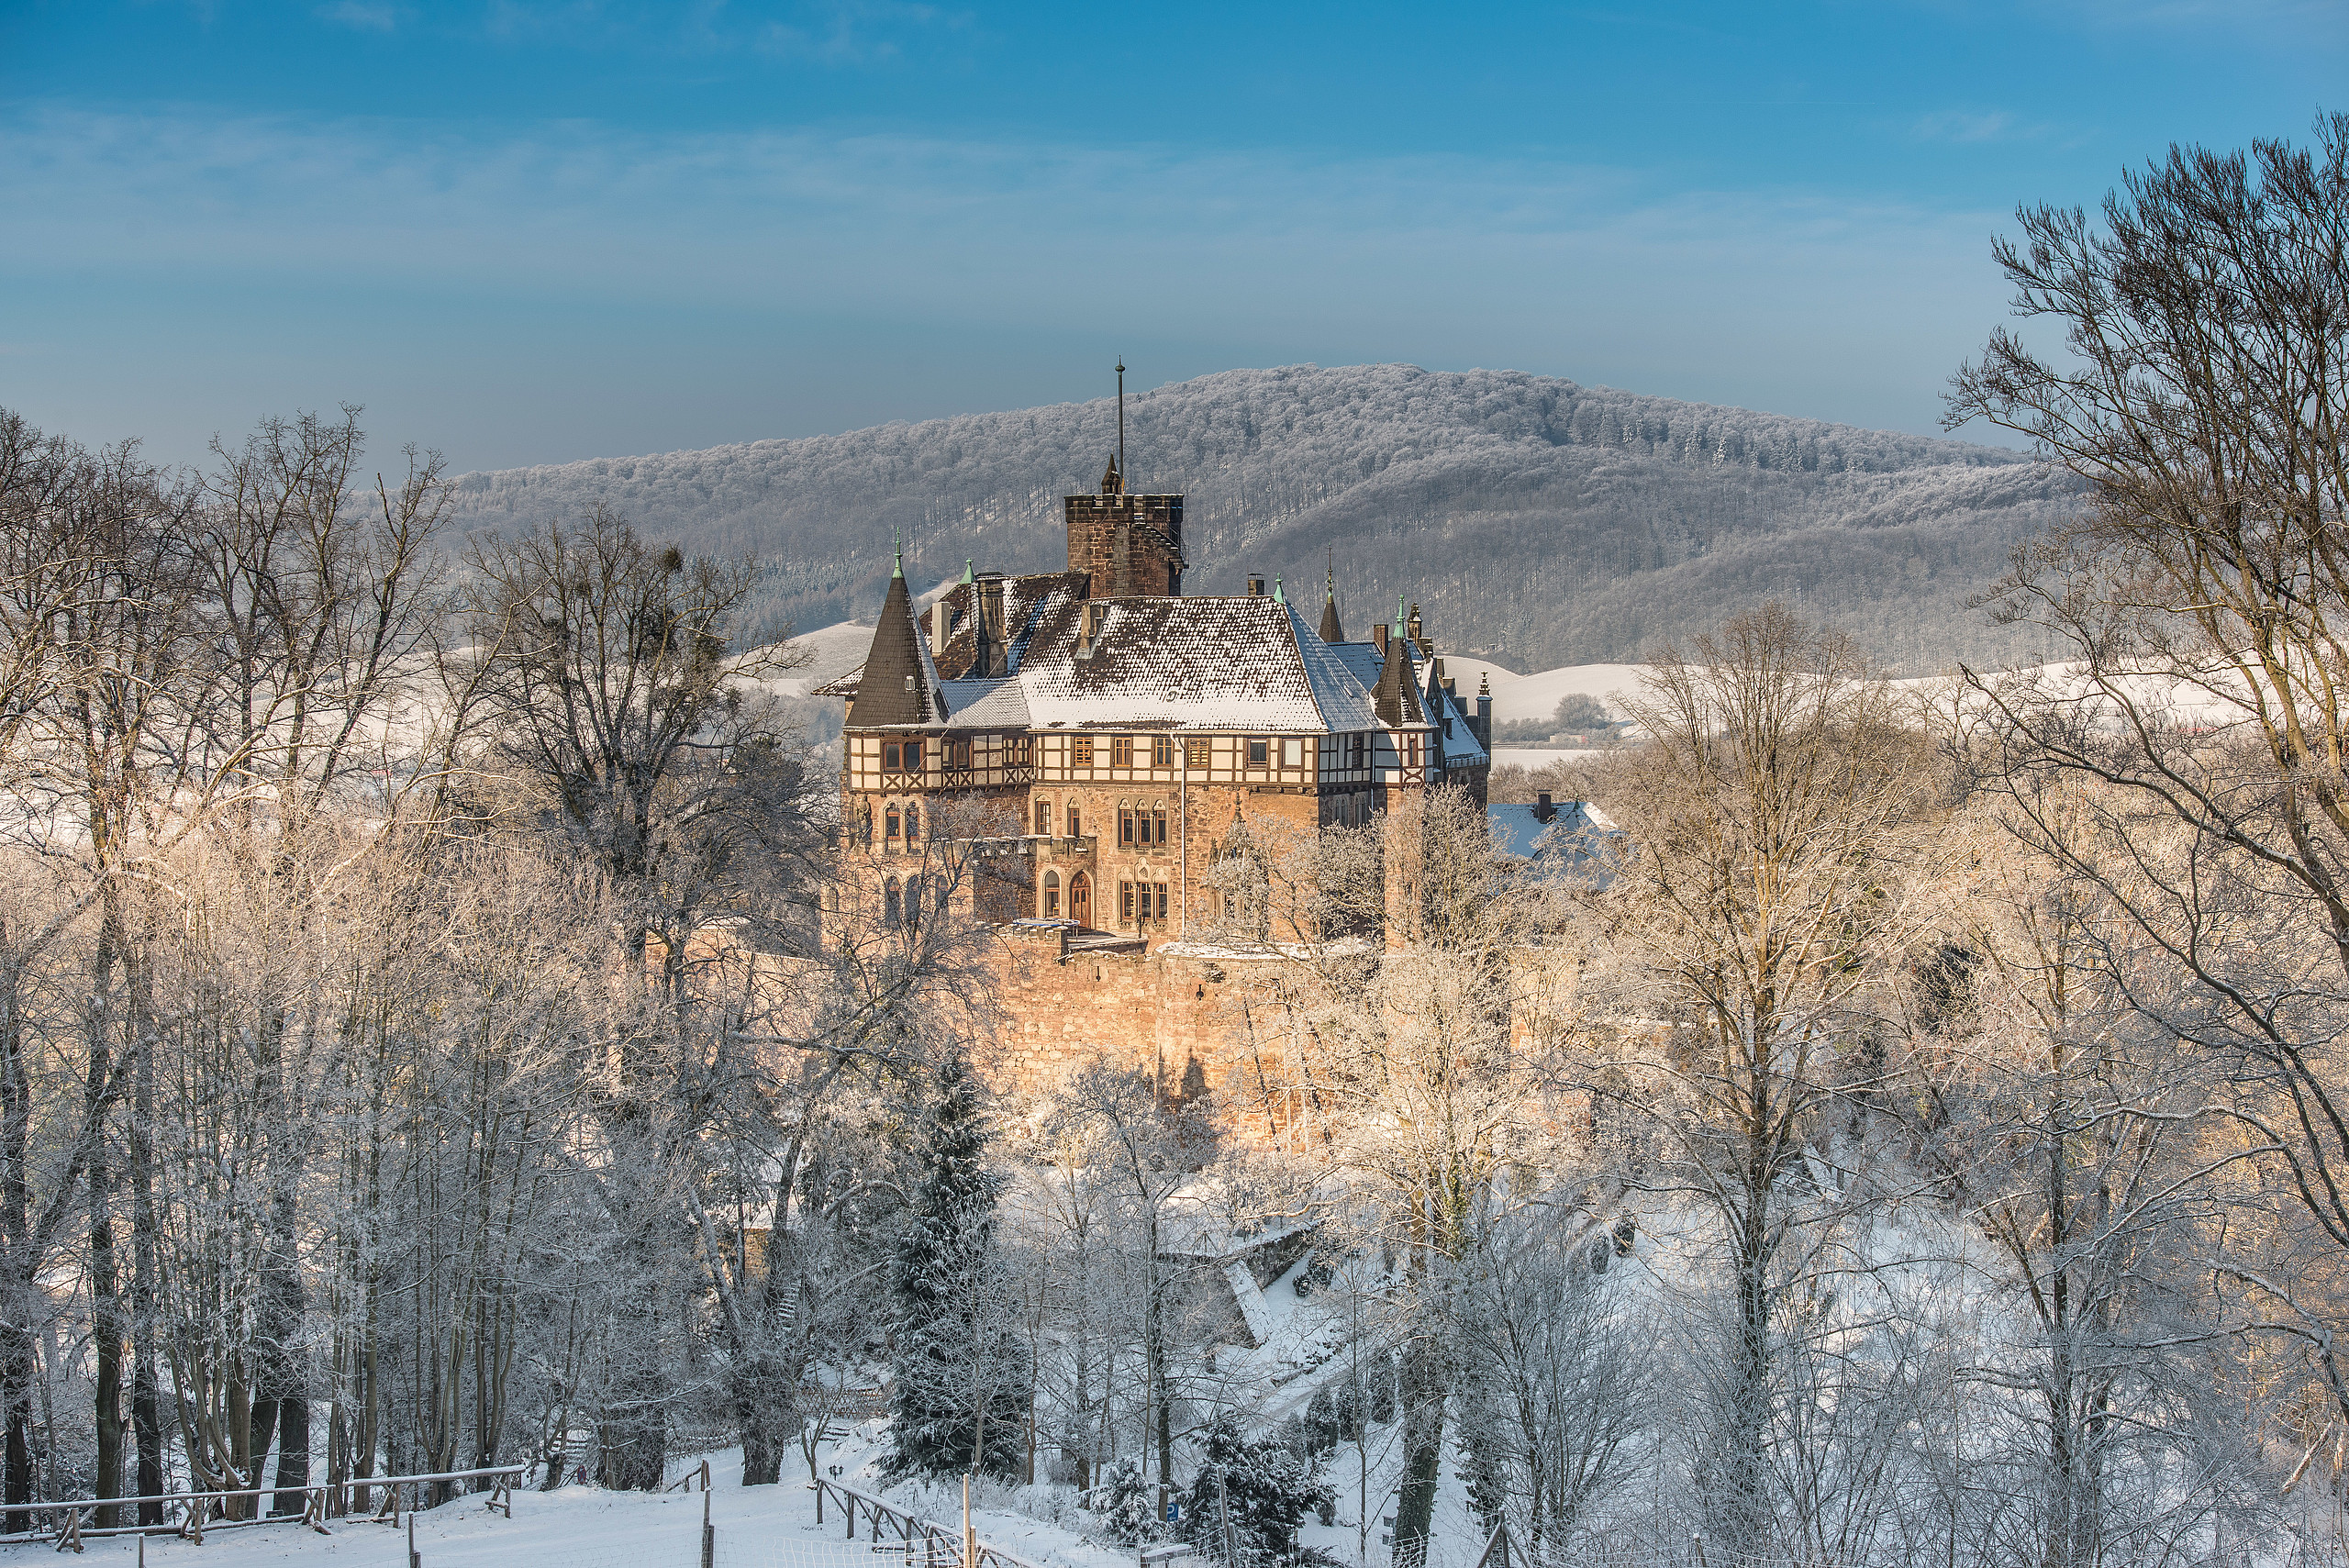 Schloss Berlepsch from a distance dusted with snow